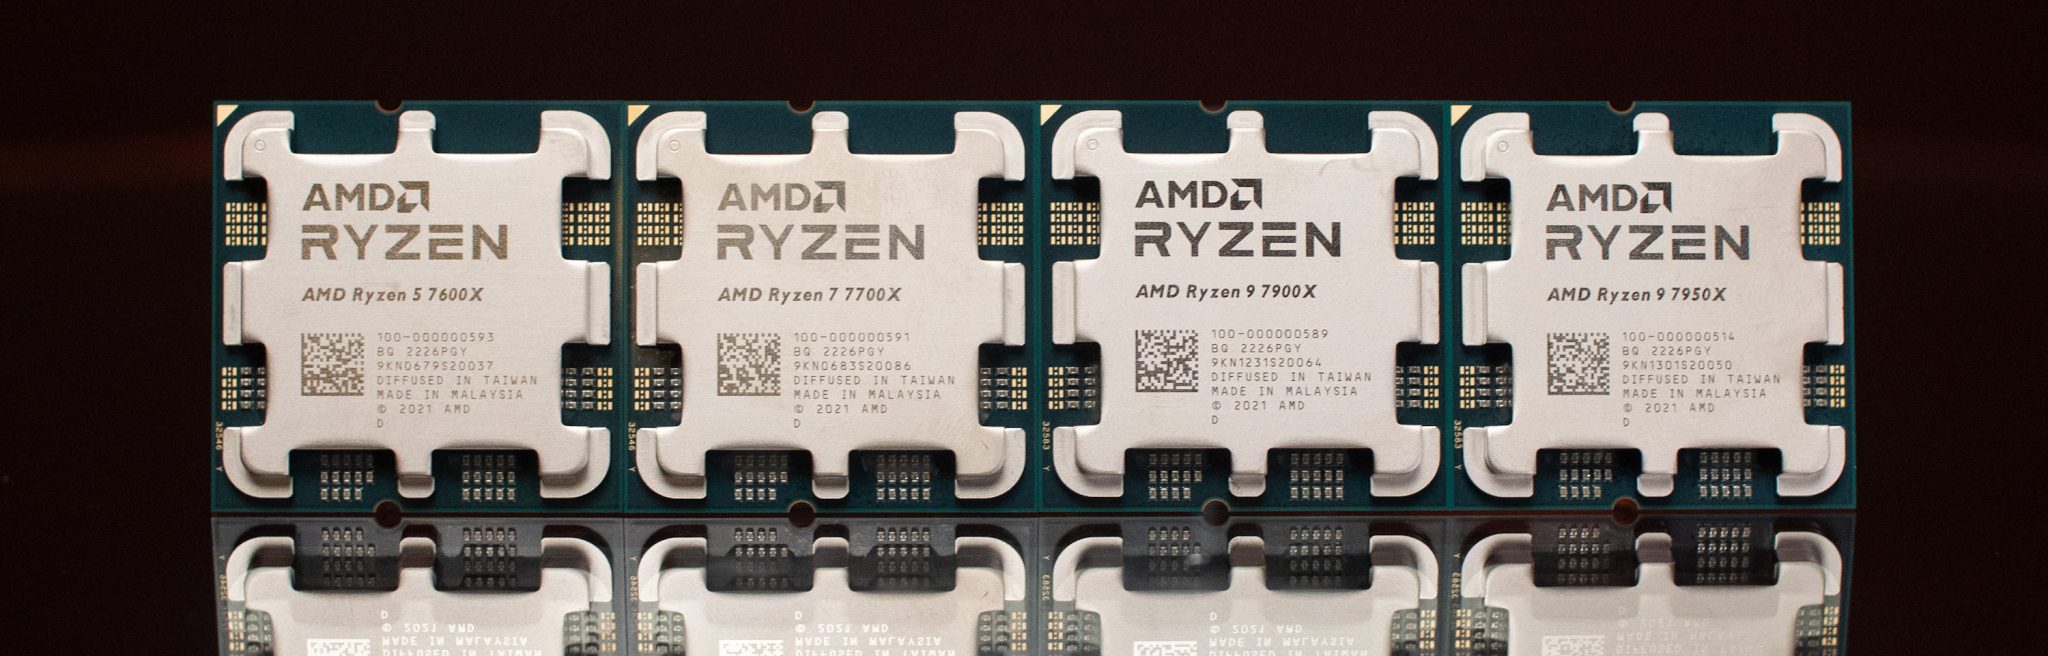 AMD-RYZEN-7000.jpg